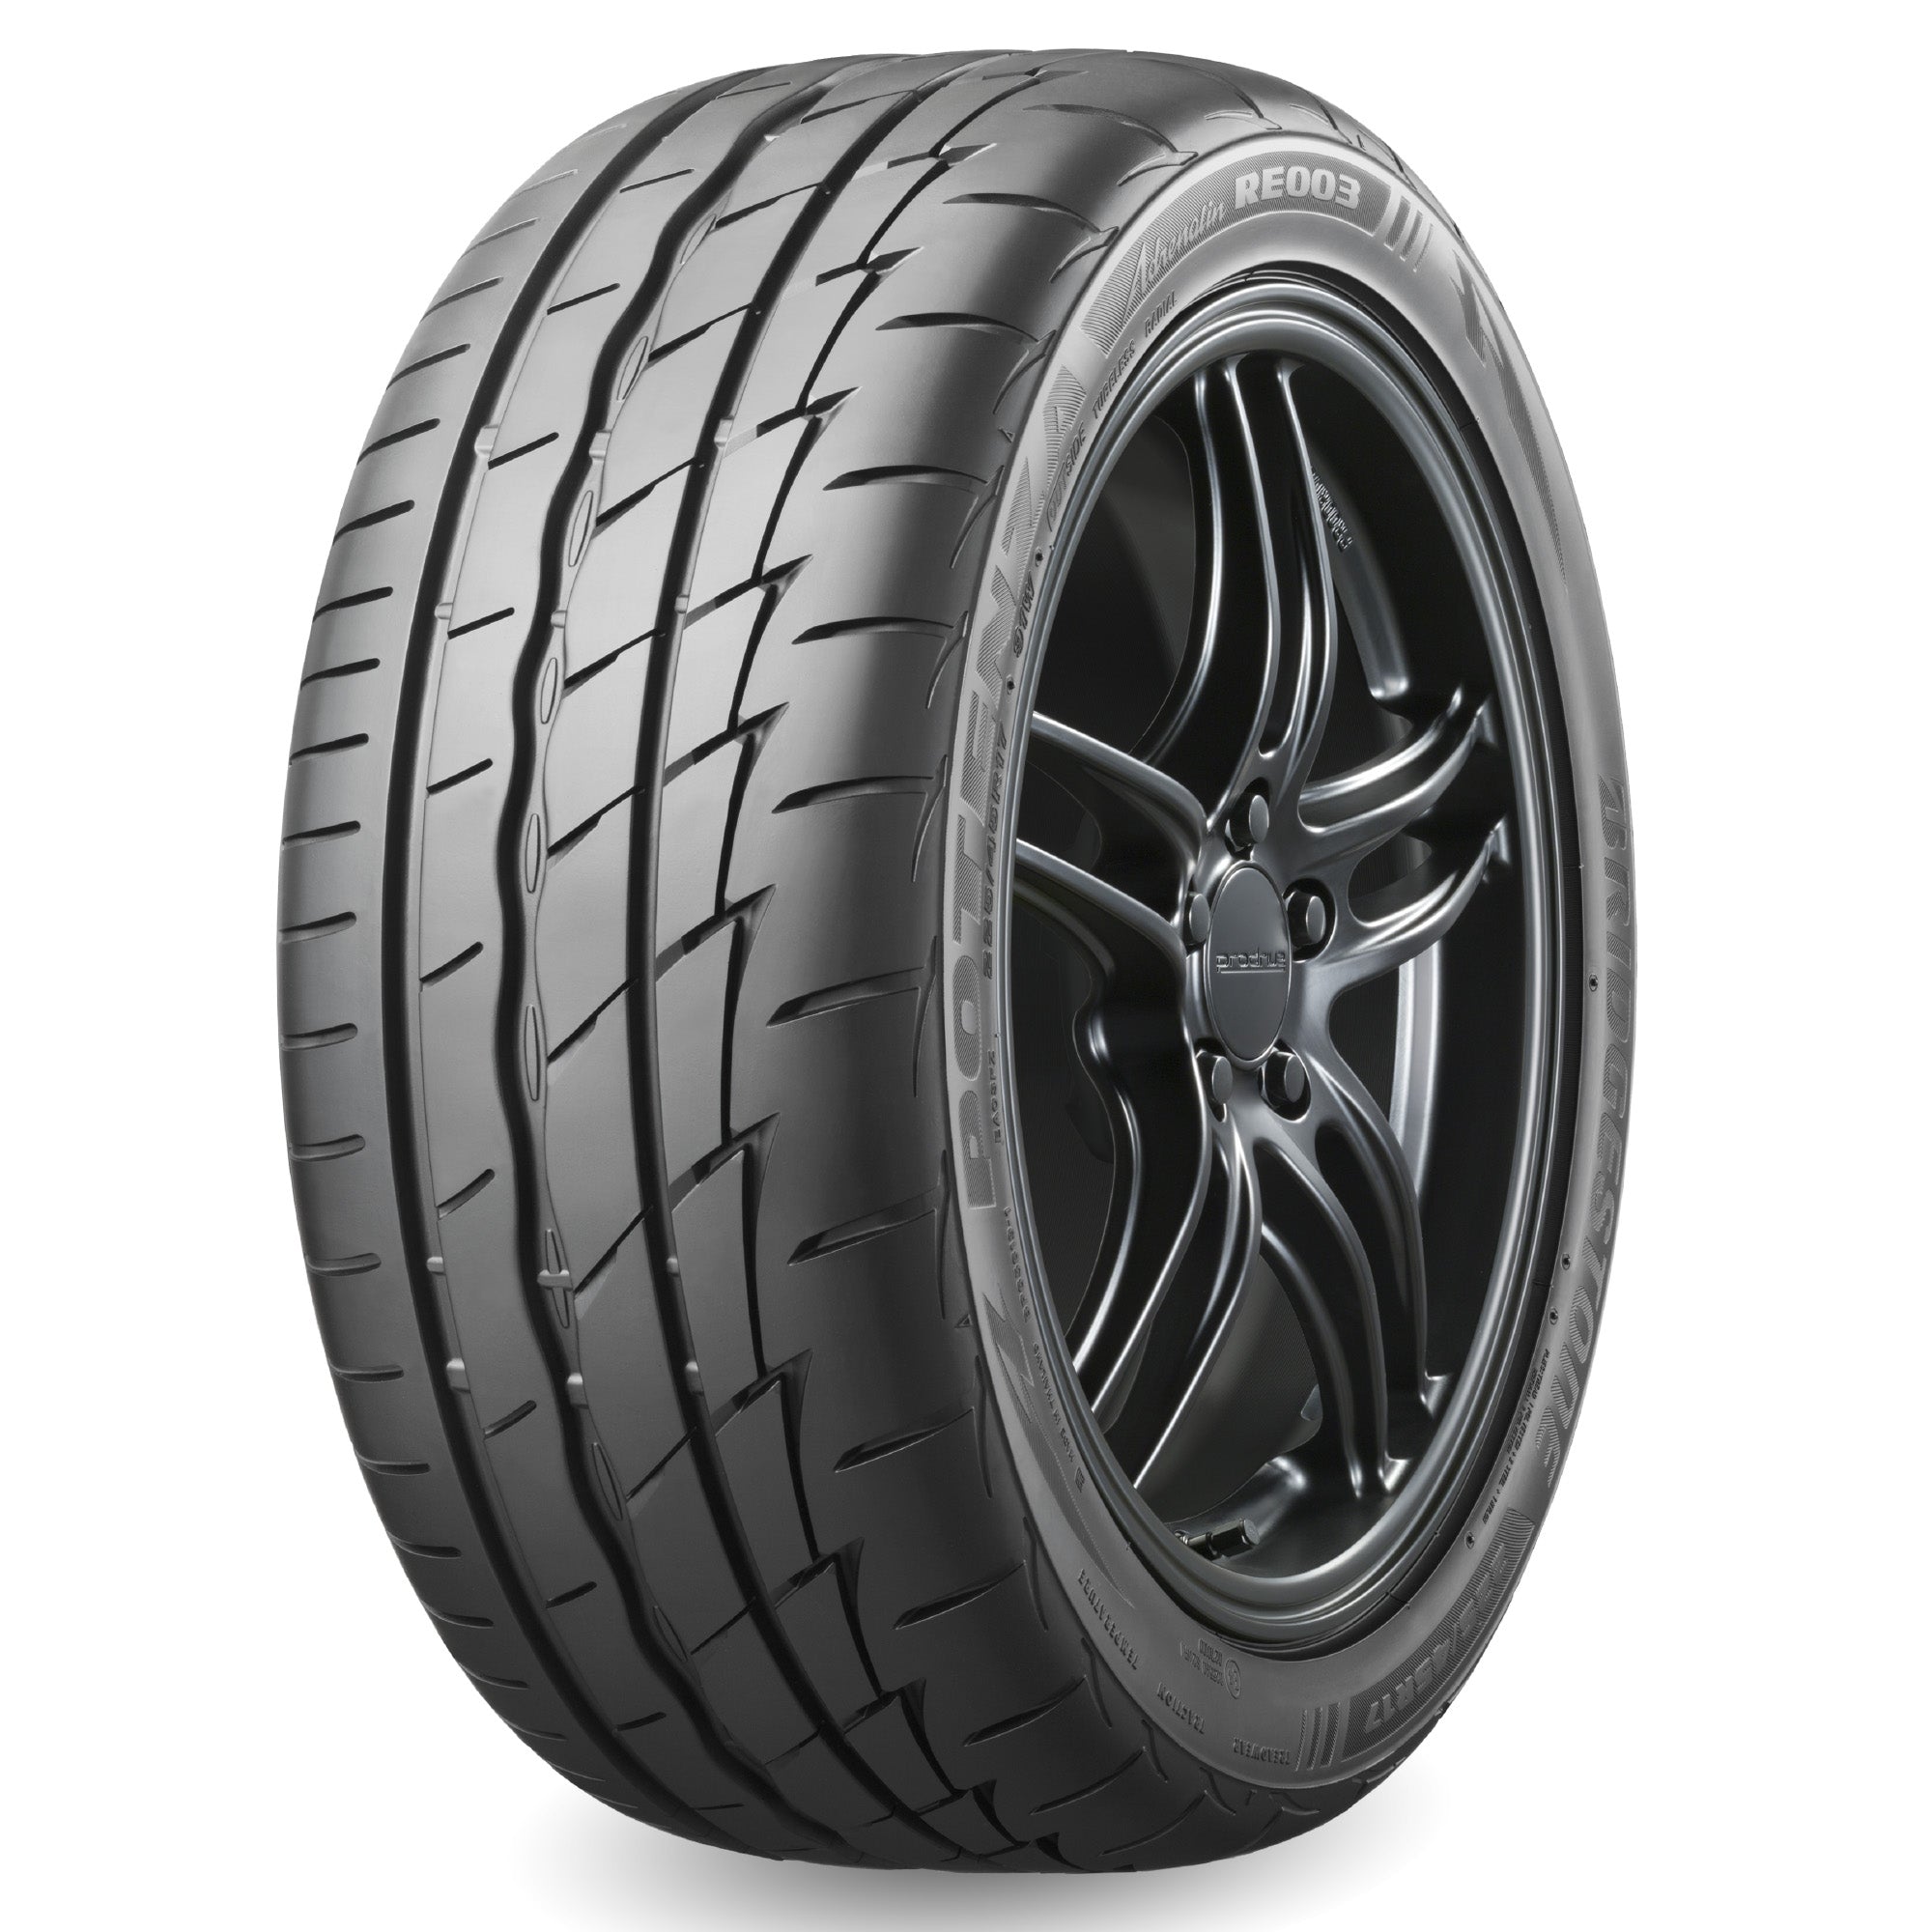 225/45R17 Bridgestone Potenza RE003 Adrenalin 94W Tyre